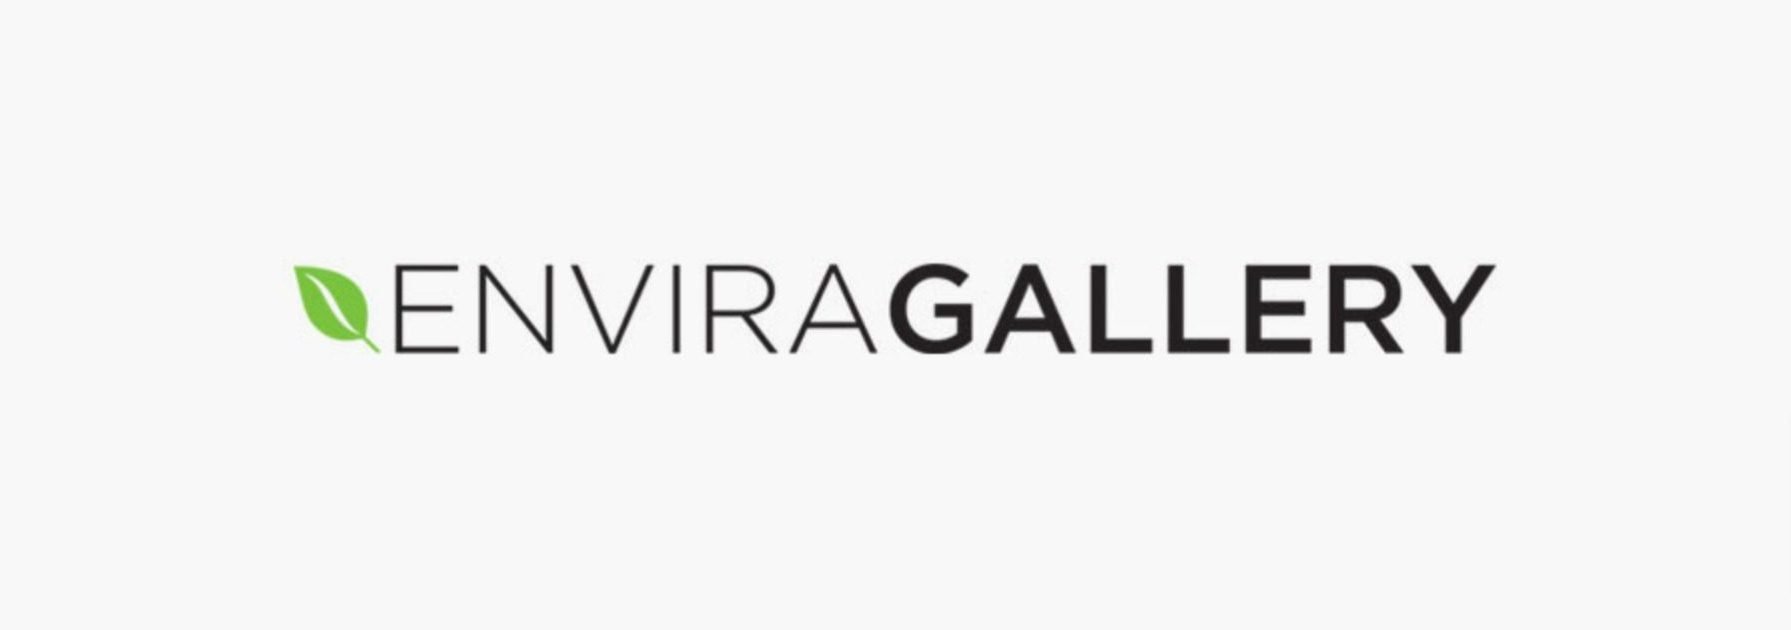 Envira gallery WordPress plugin Logo.